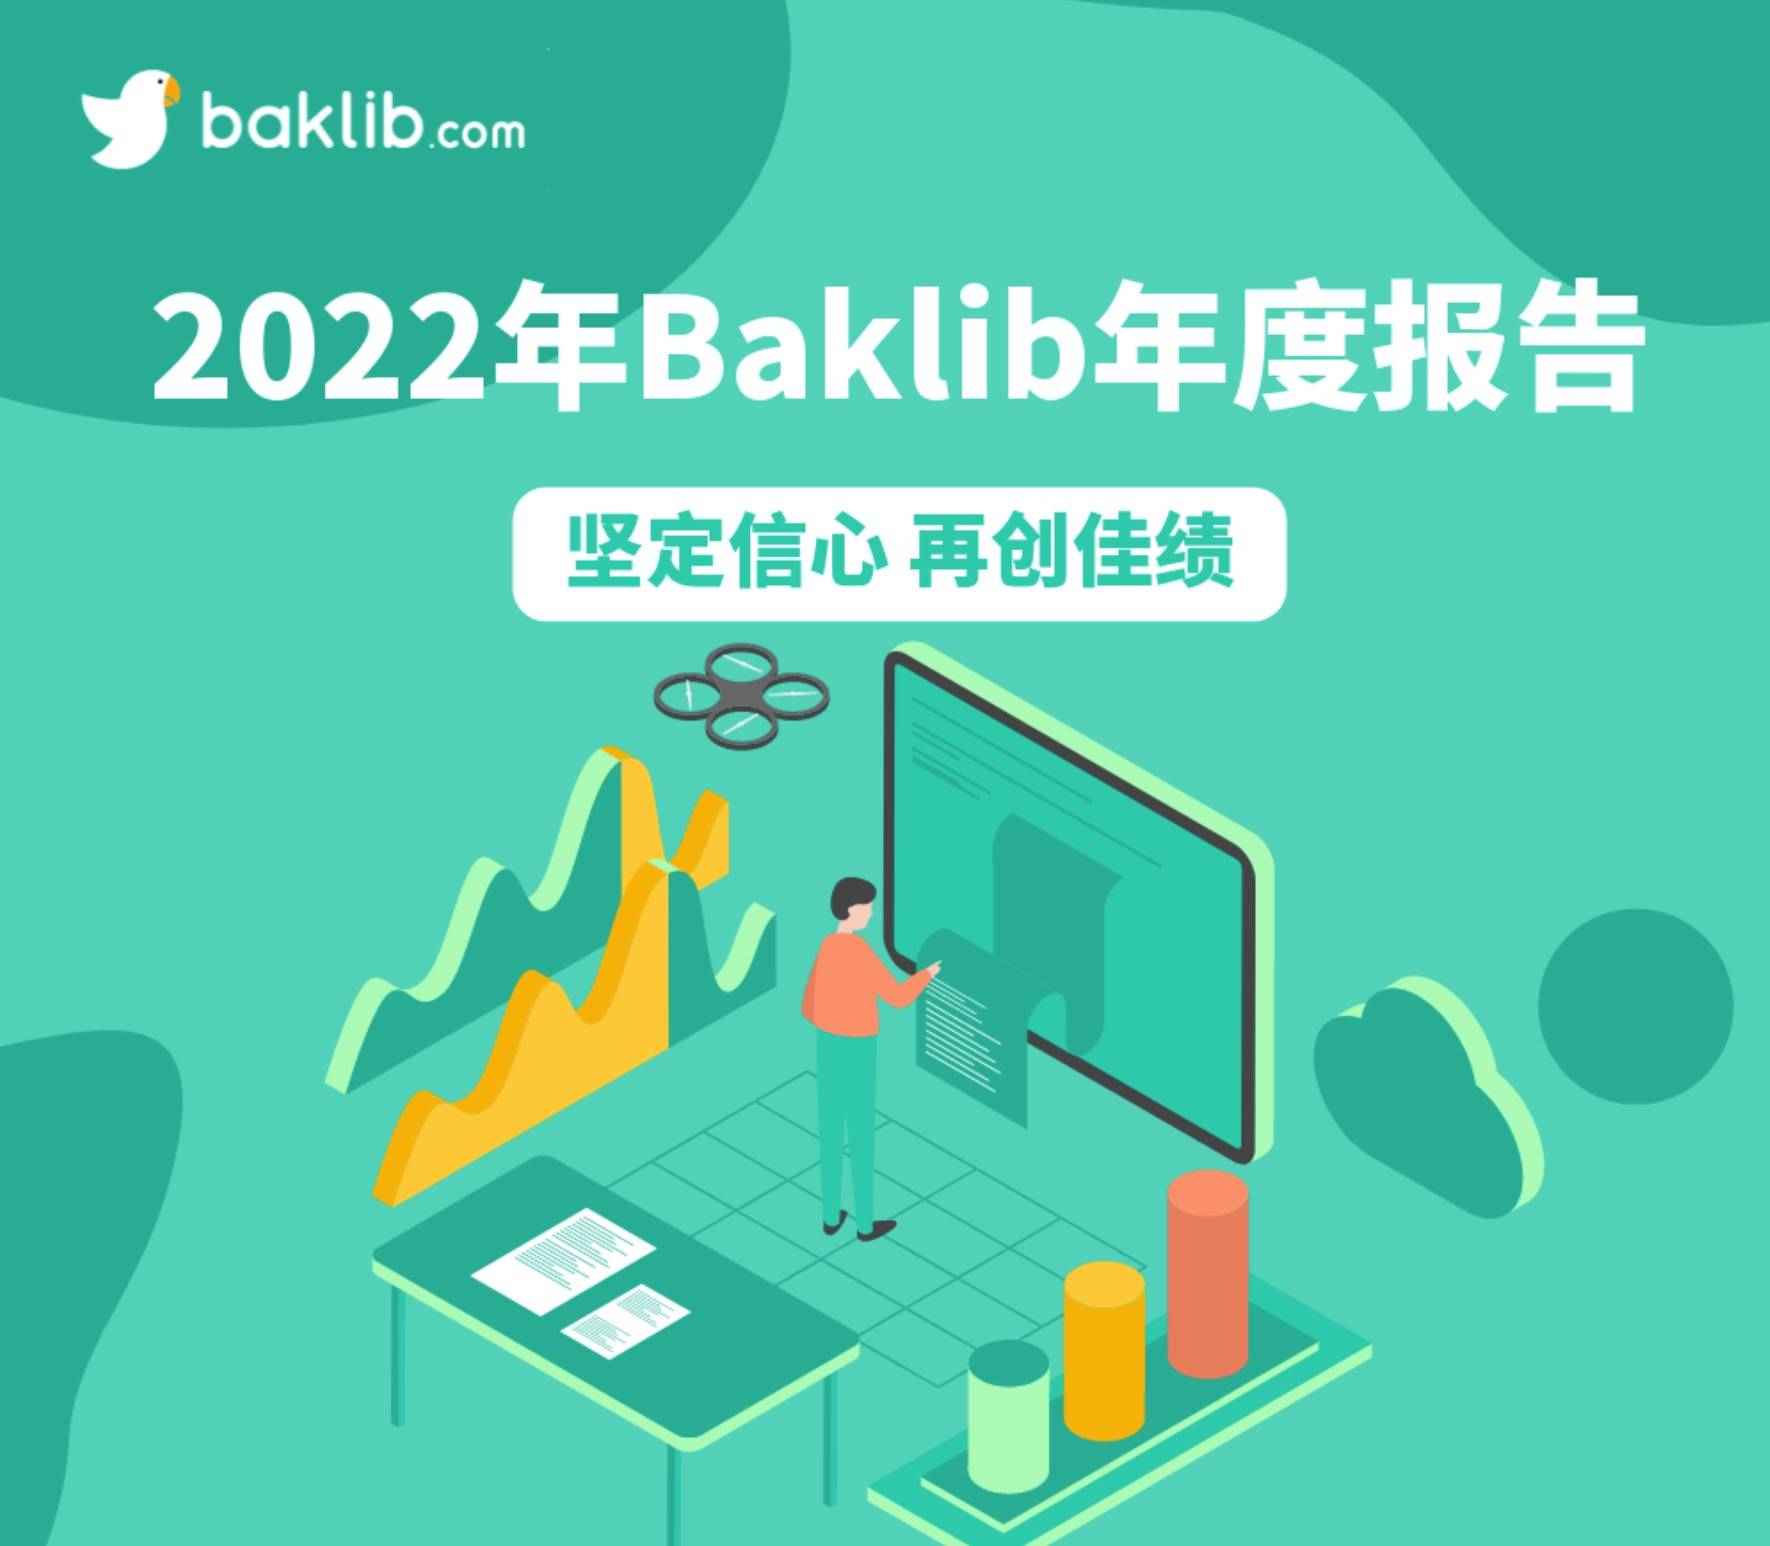 Baklib 注册用户突破8万，Baklib2022年度成绩单已送达，请查收